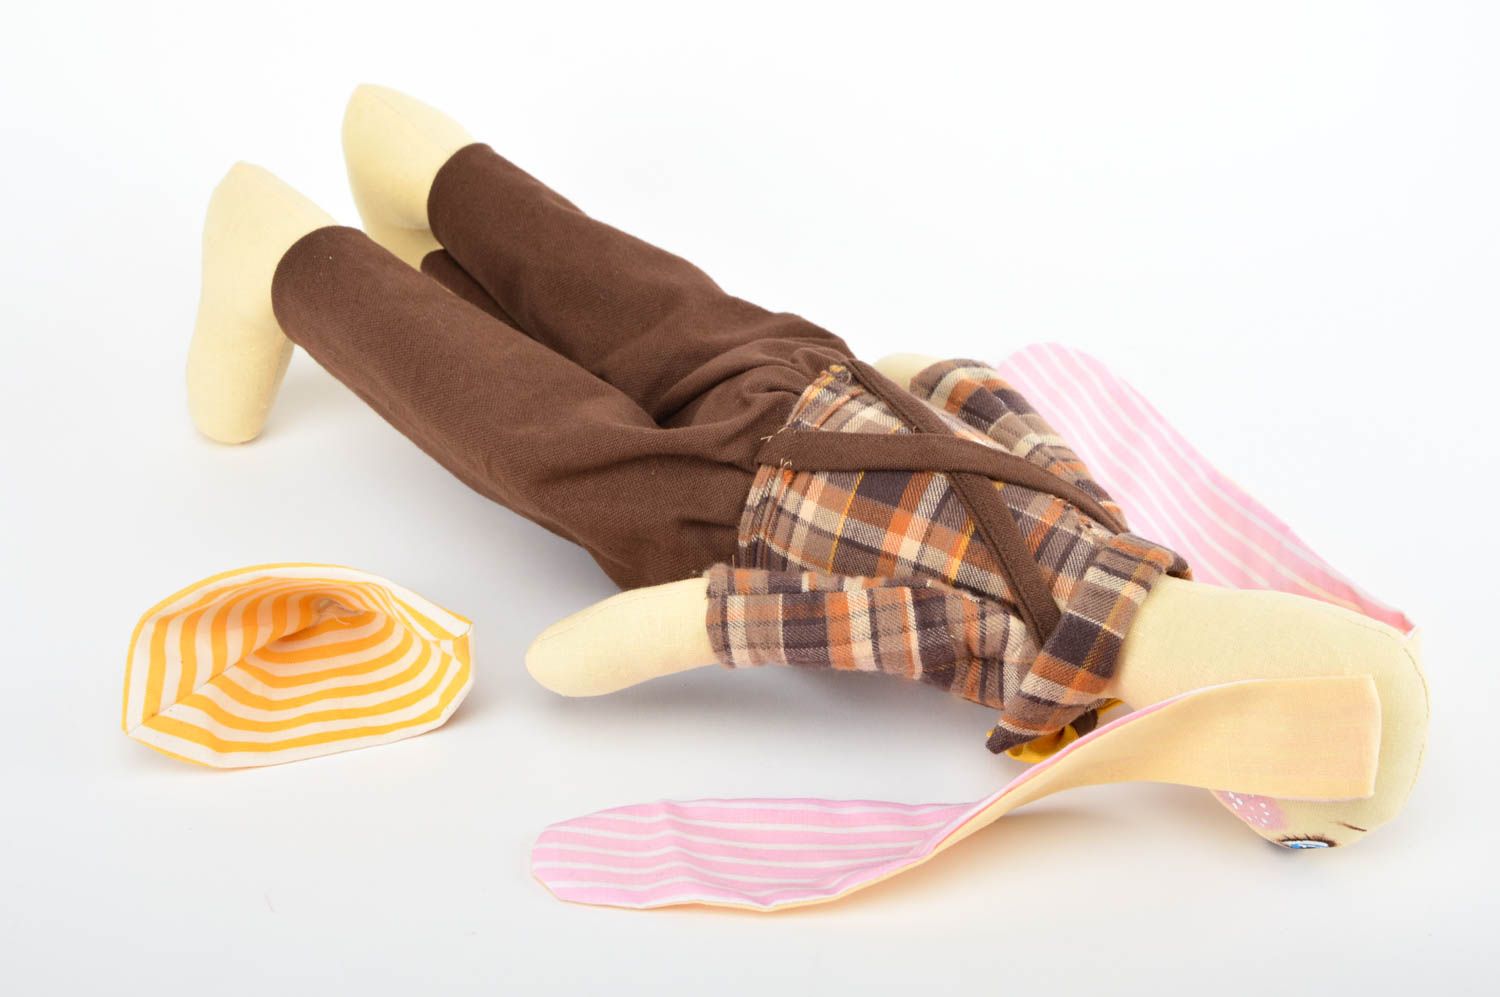 Handmade decorative designer toy stylish unusual soft toy cute present for kids photo 5